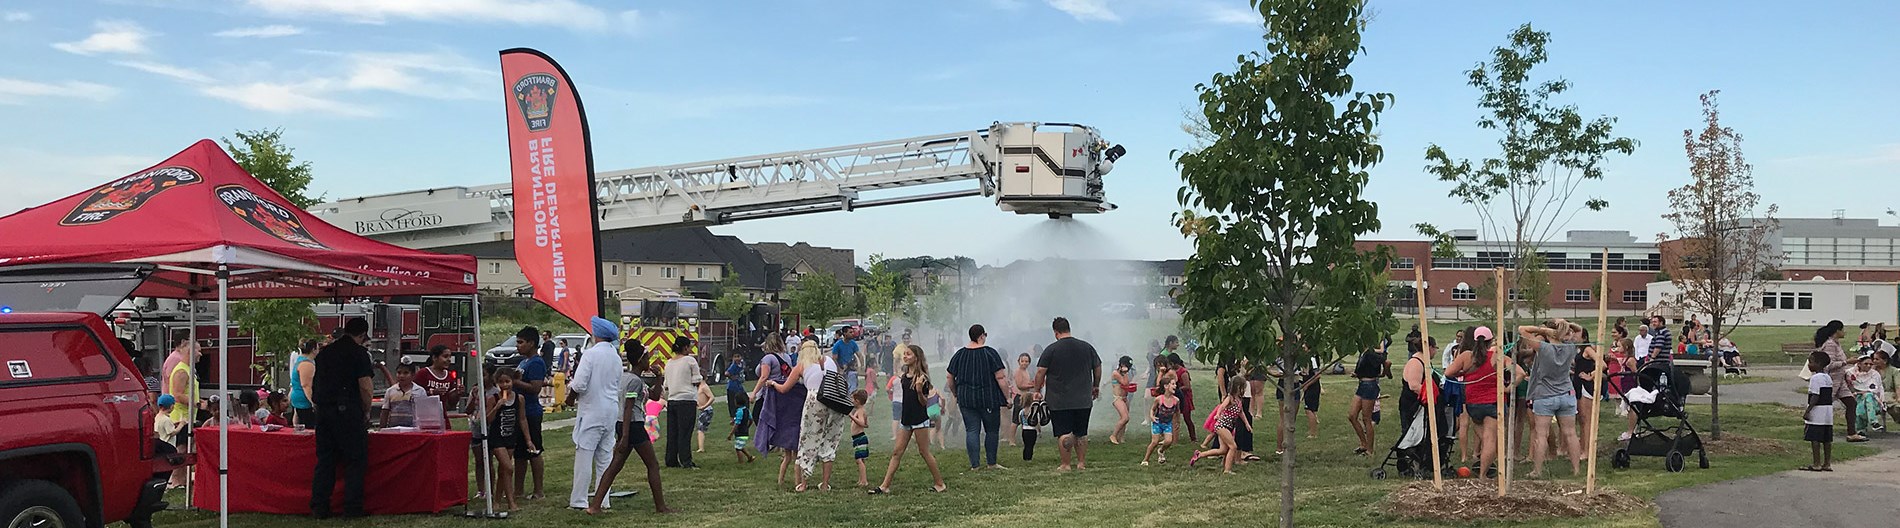 Fire truck sprinkler running with kids underneath water